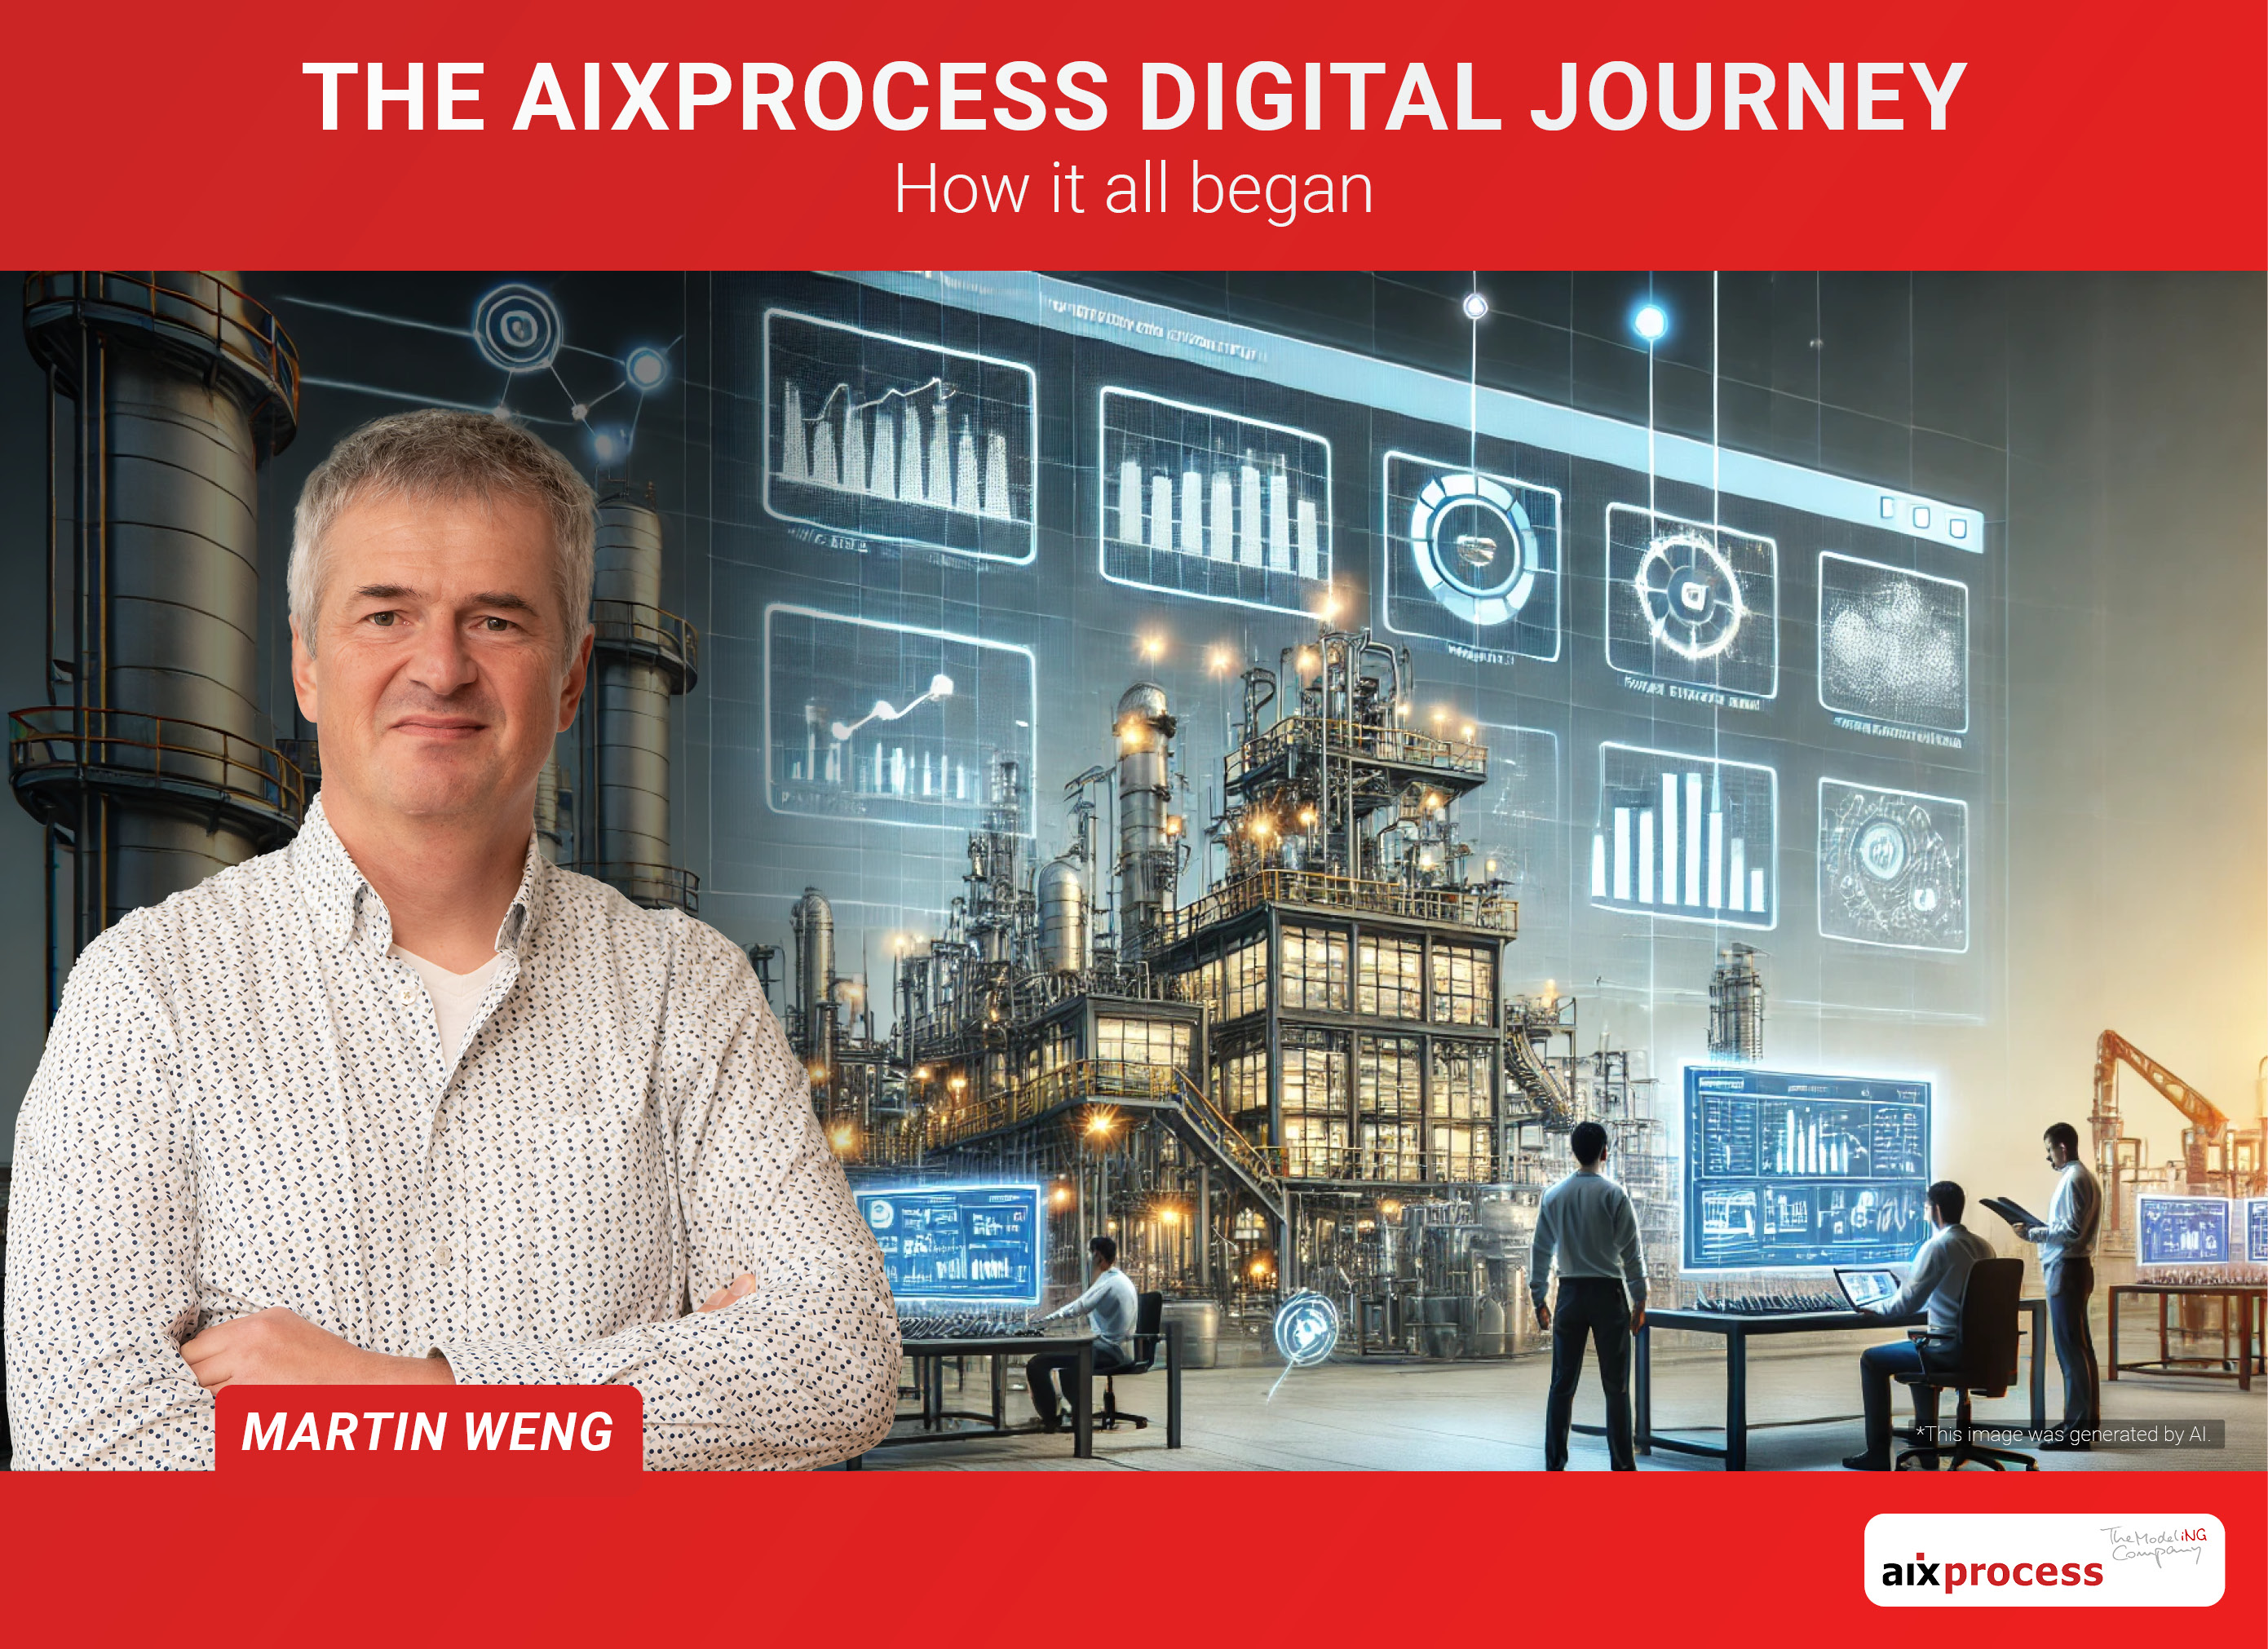 The aixprocess digital journey